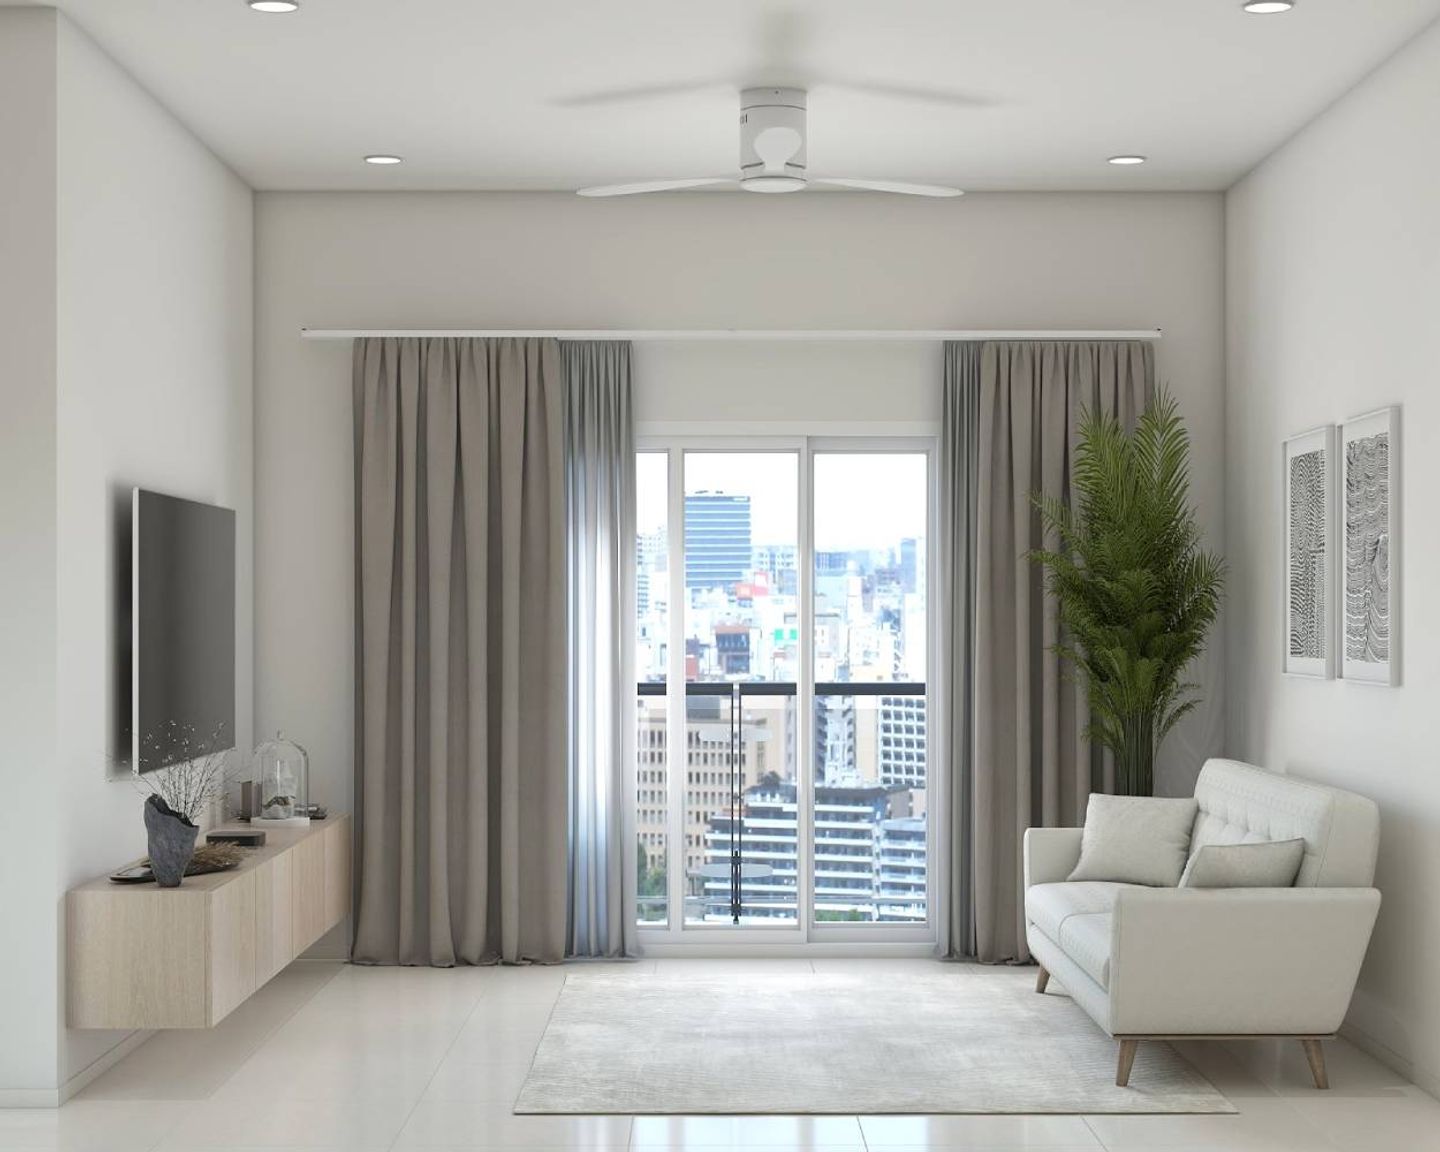 12 m² Living Room Design With White 2-Seater Sofa - Livspace